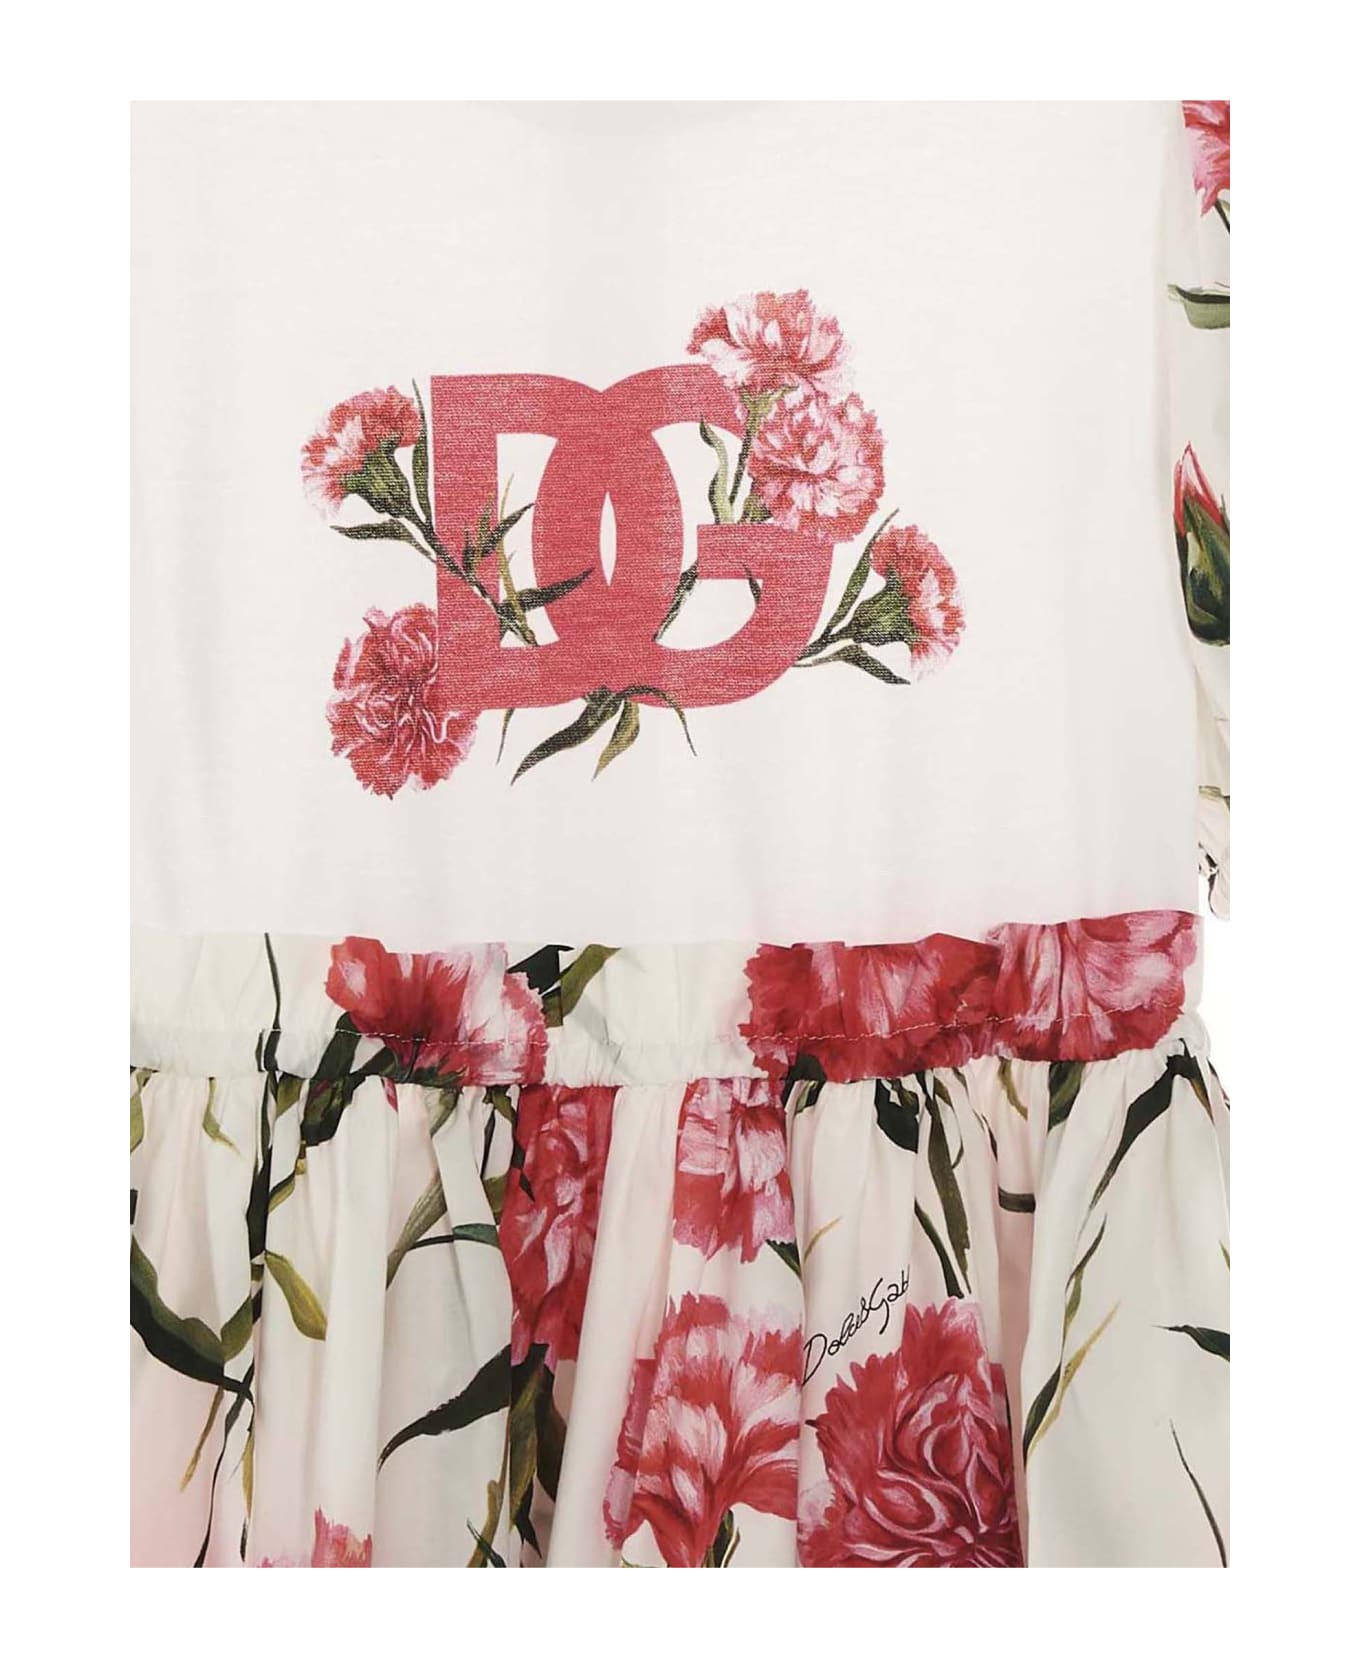 Dolce & Gabbana 'happy Garden' Dress - Multicolor